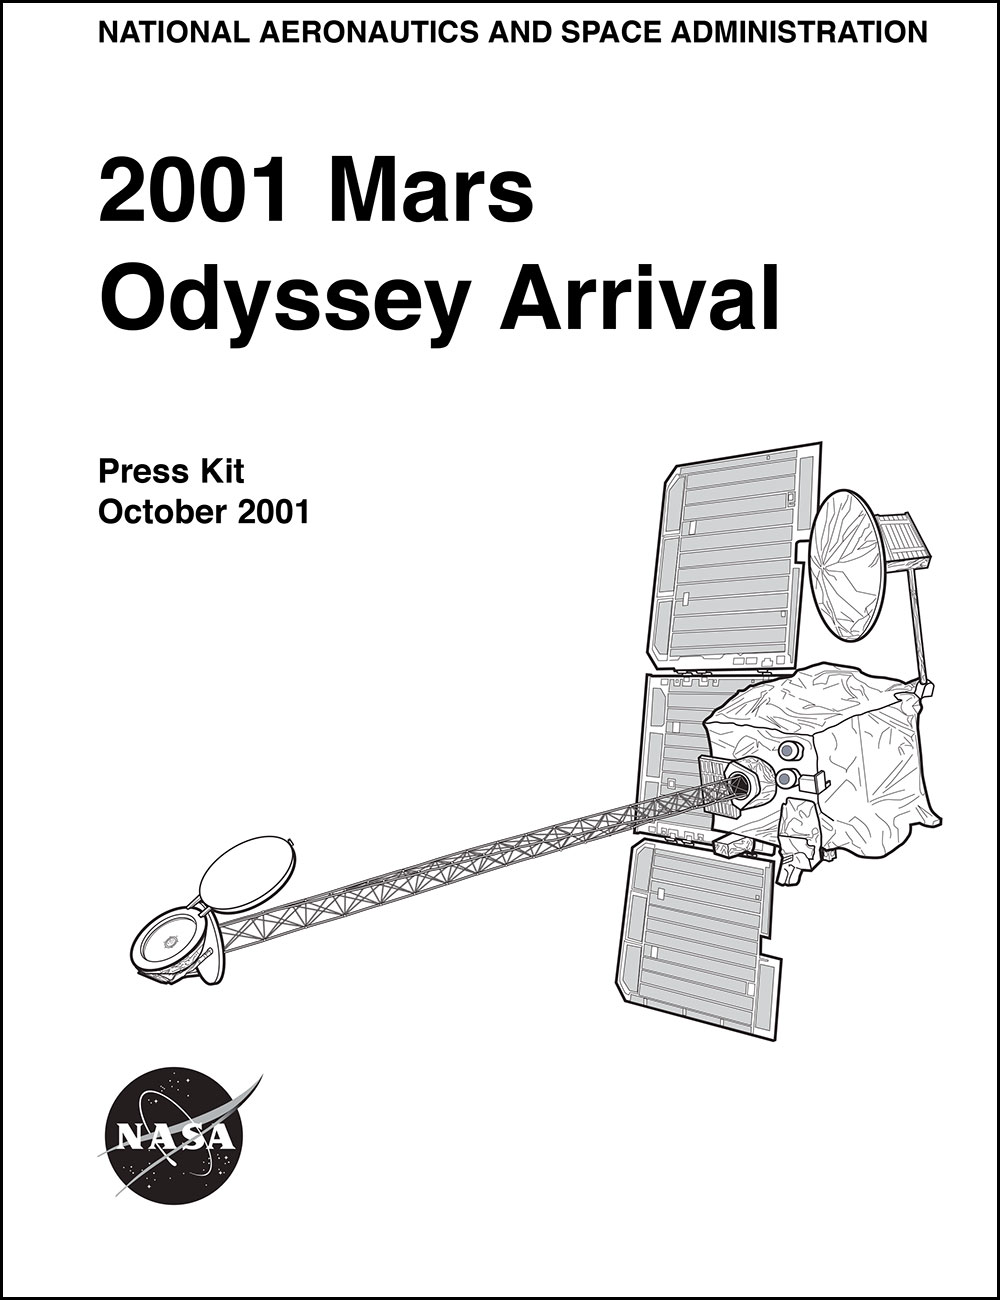 Odyssey arrival press kit